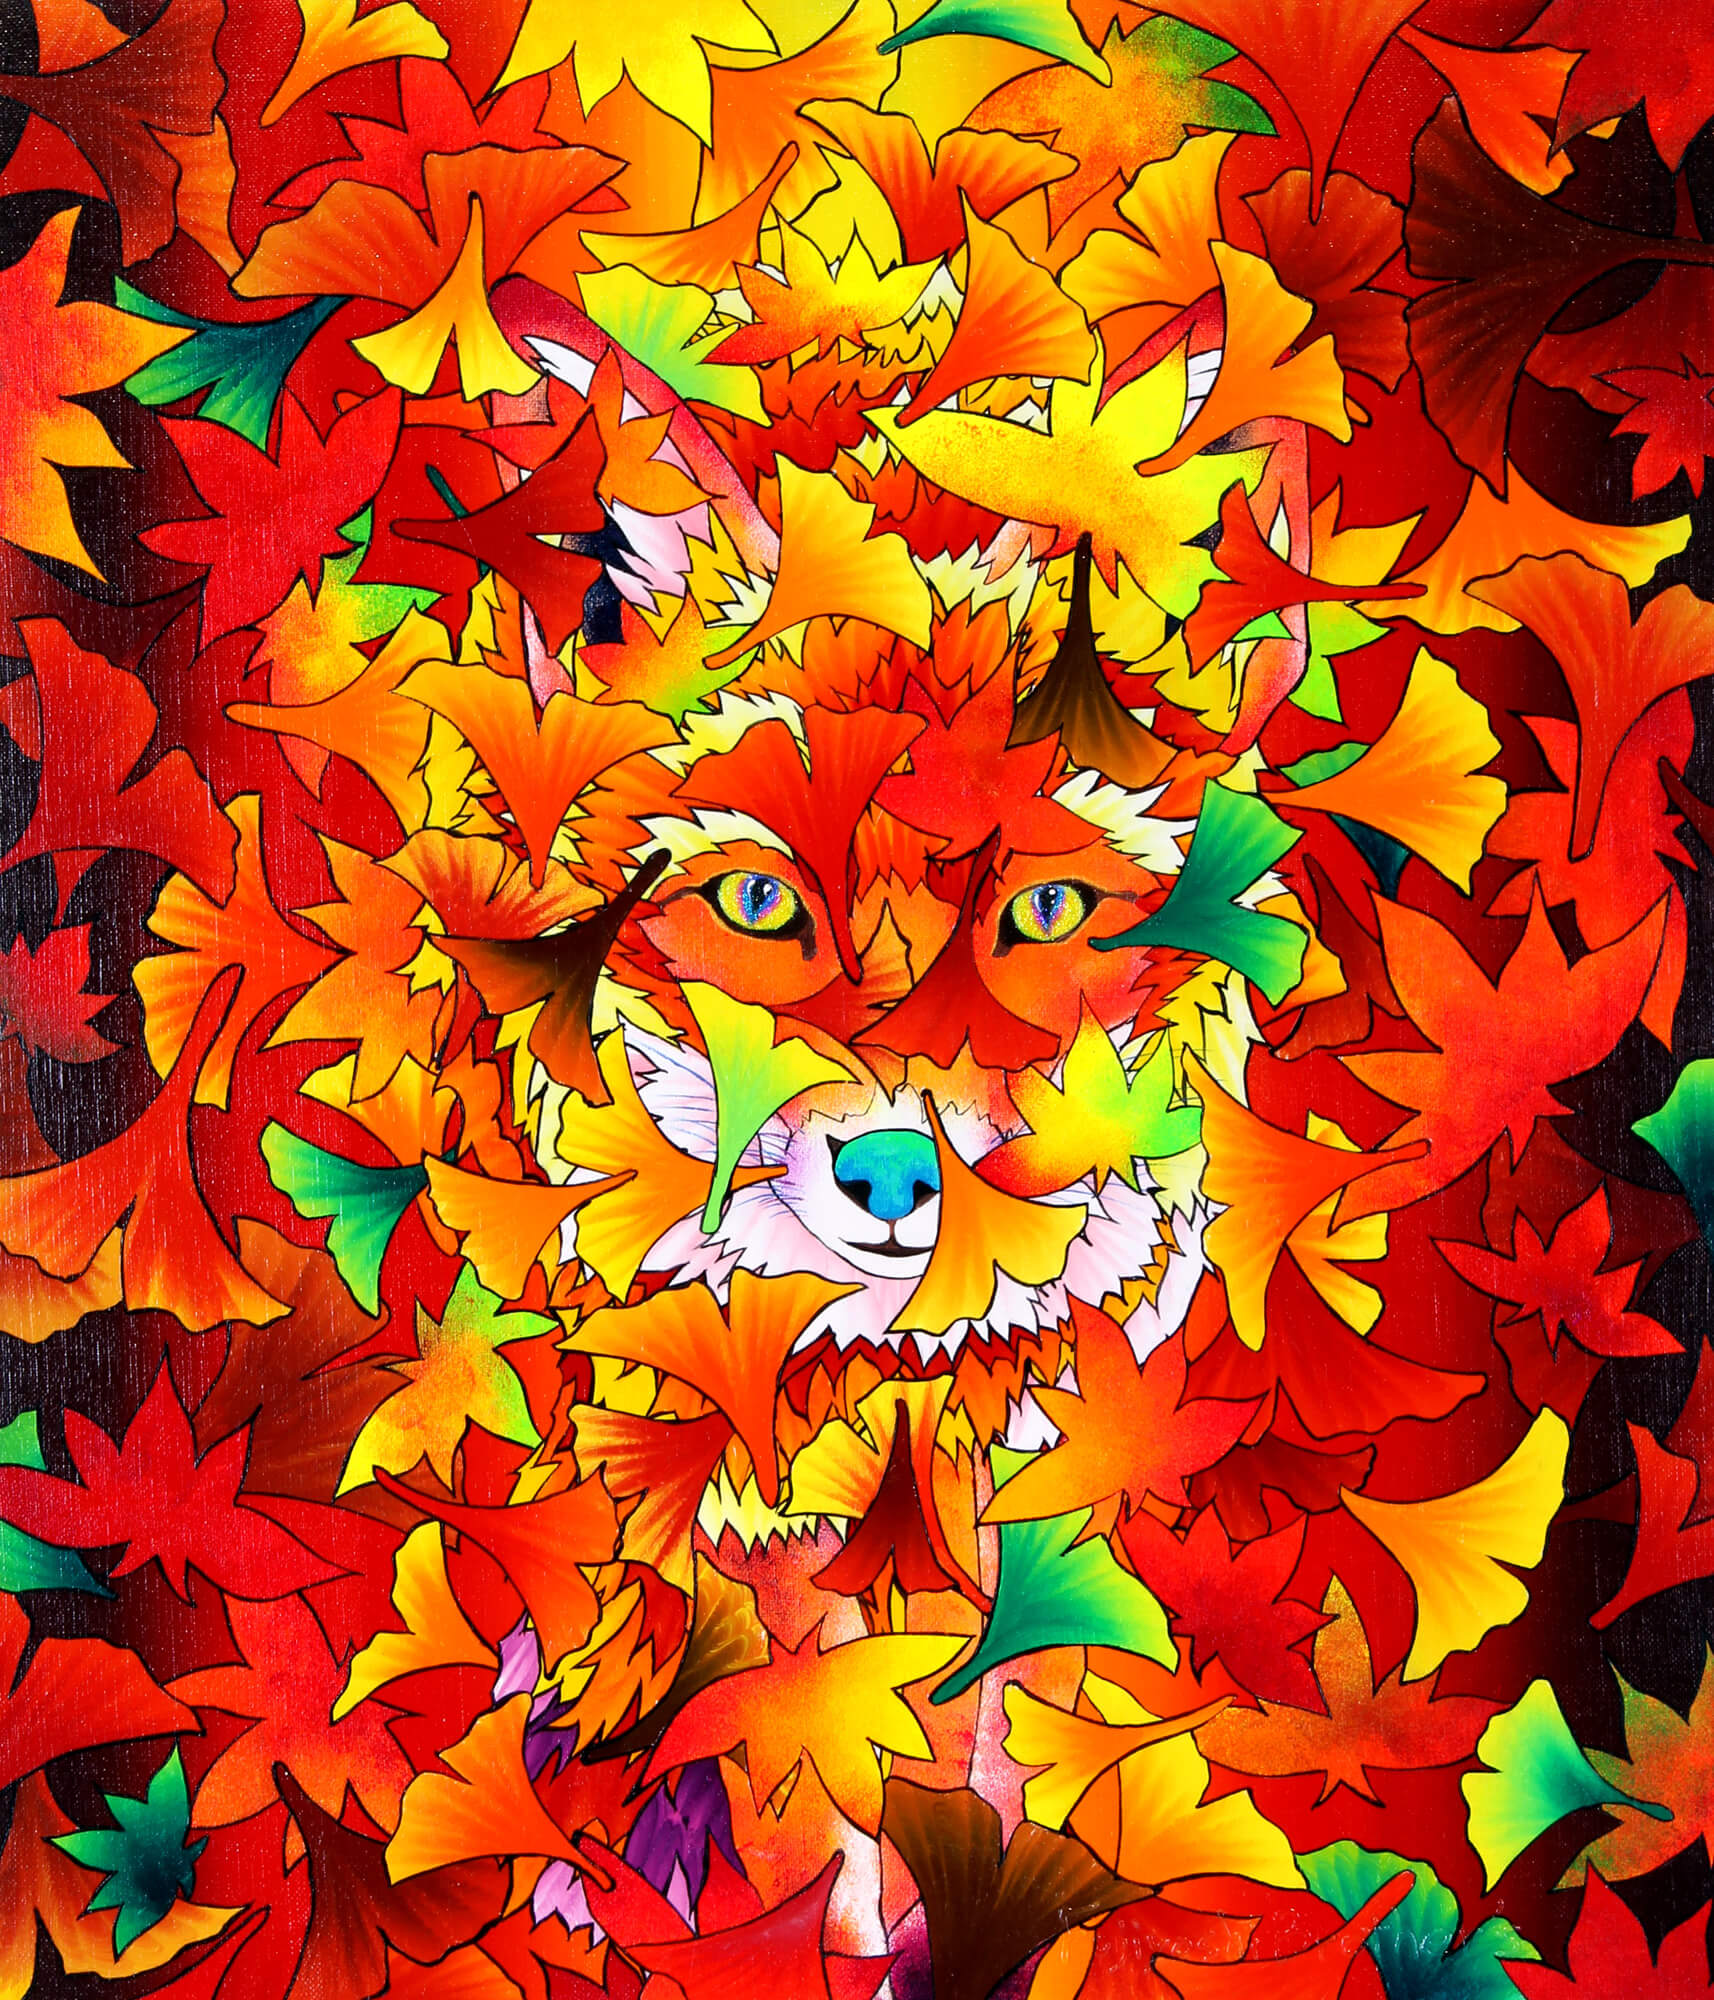 Ginsyu Fox - falling leaves改行
Acrylic,and glitter on canvas, 530×455mm, 2018